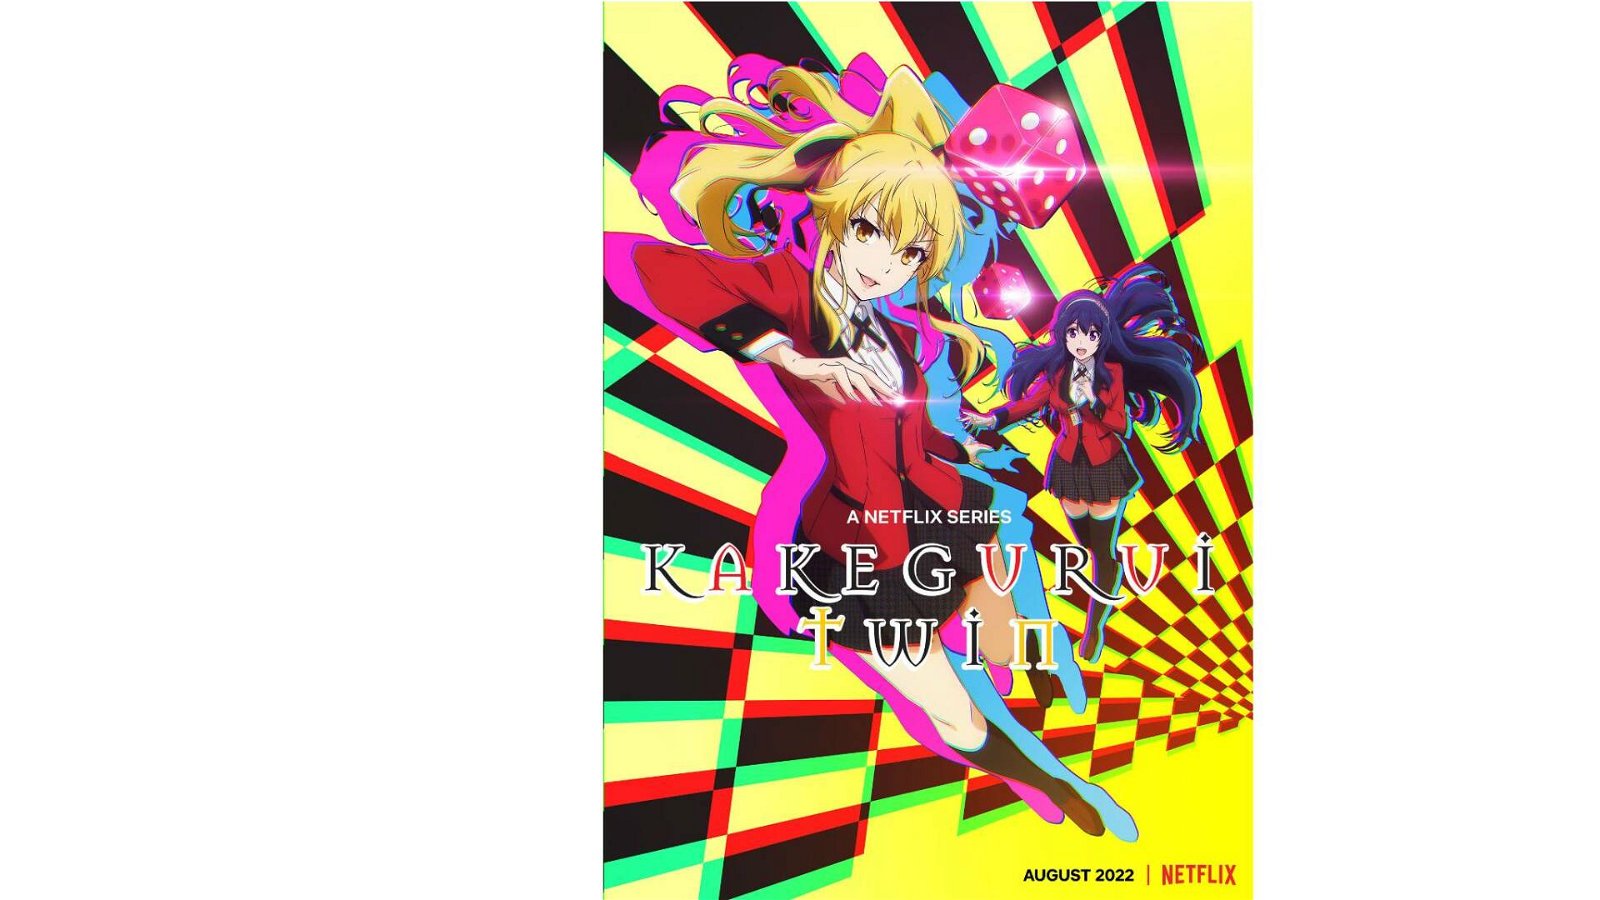 Kakegurui Twin Spinoff Series Coming to Netflix